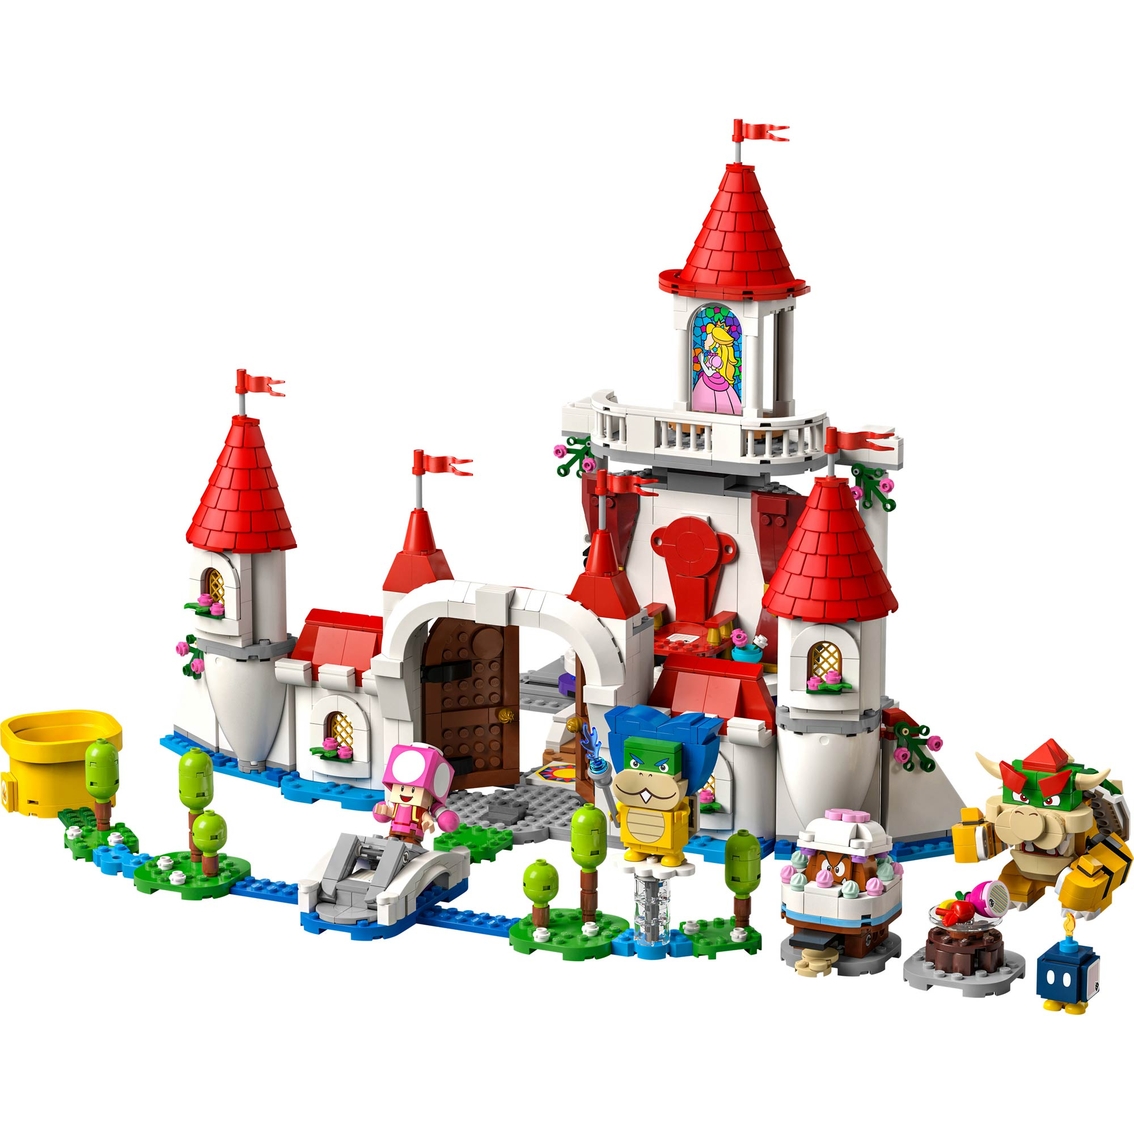 LEGO Super Mario Peach’s Castle Expansion Set - Image 2 of 3